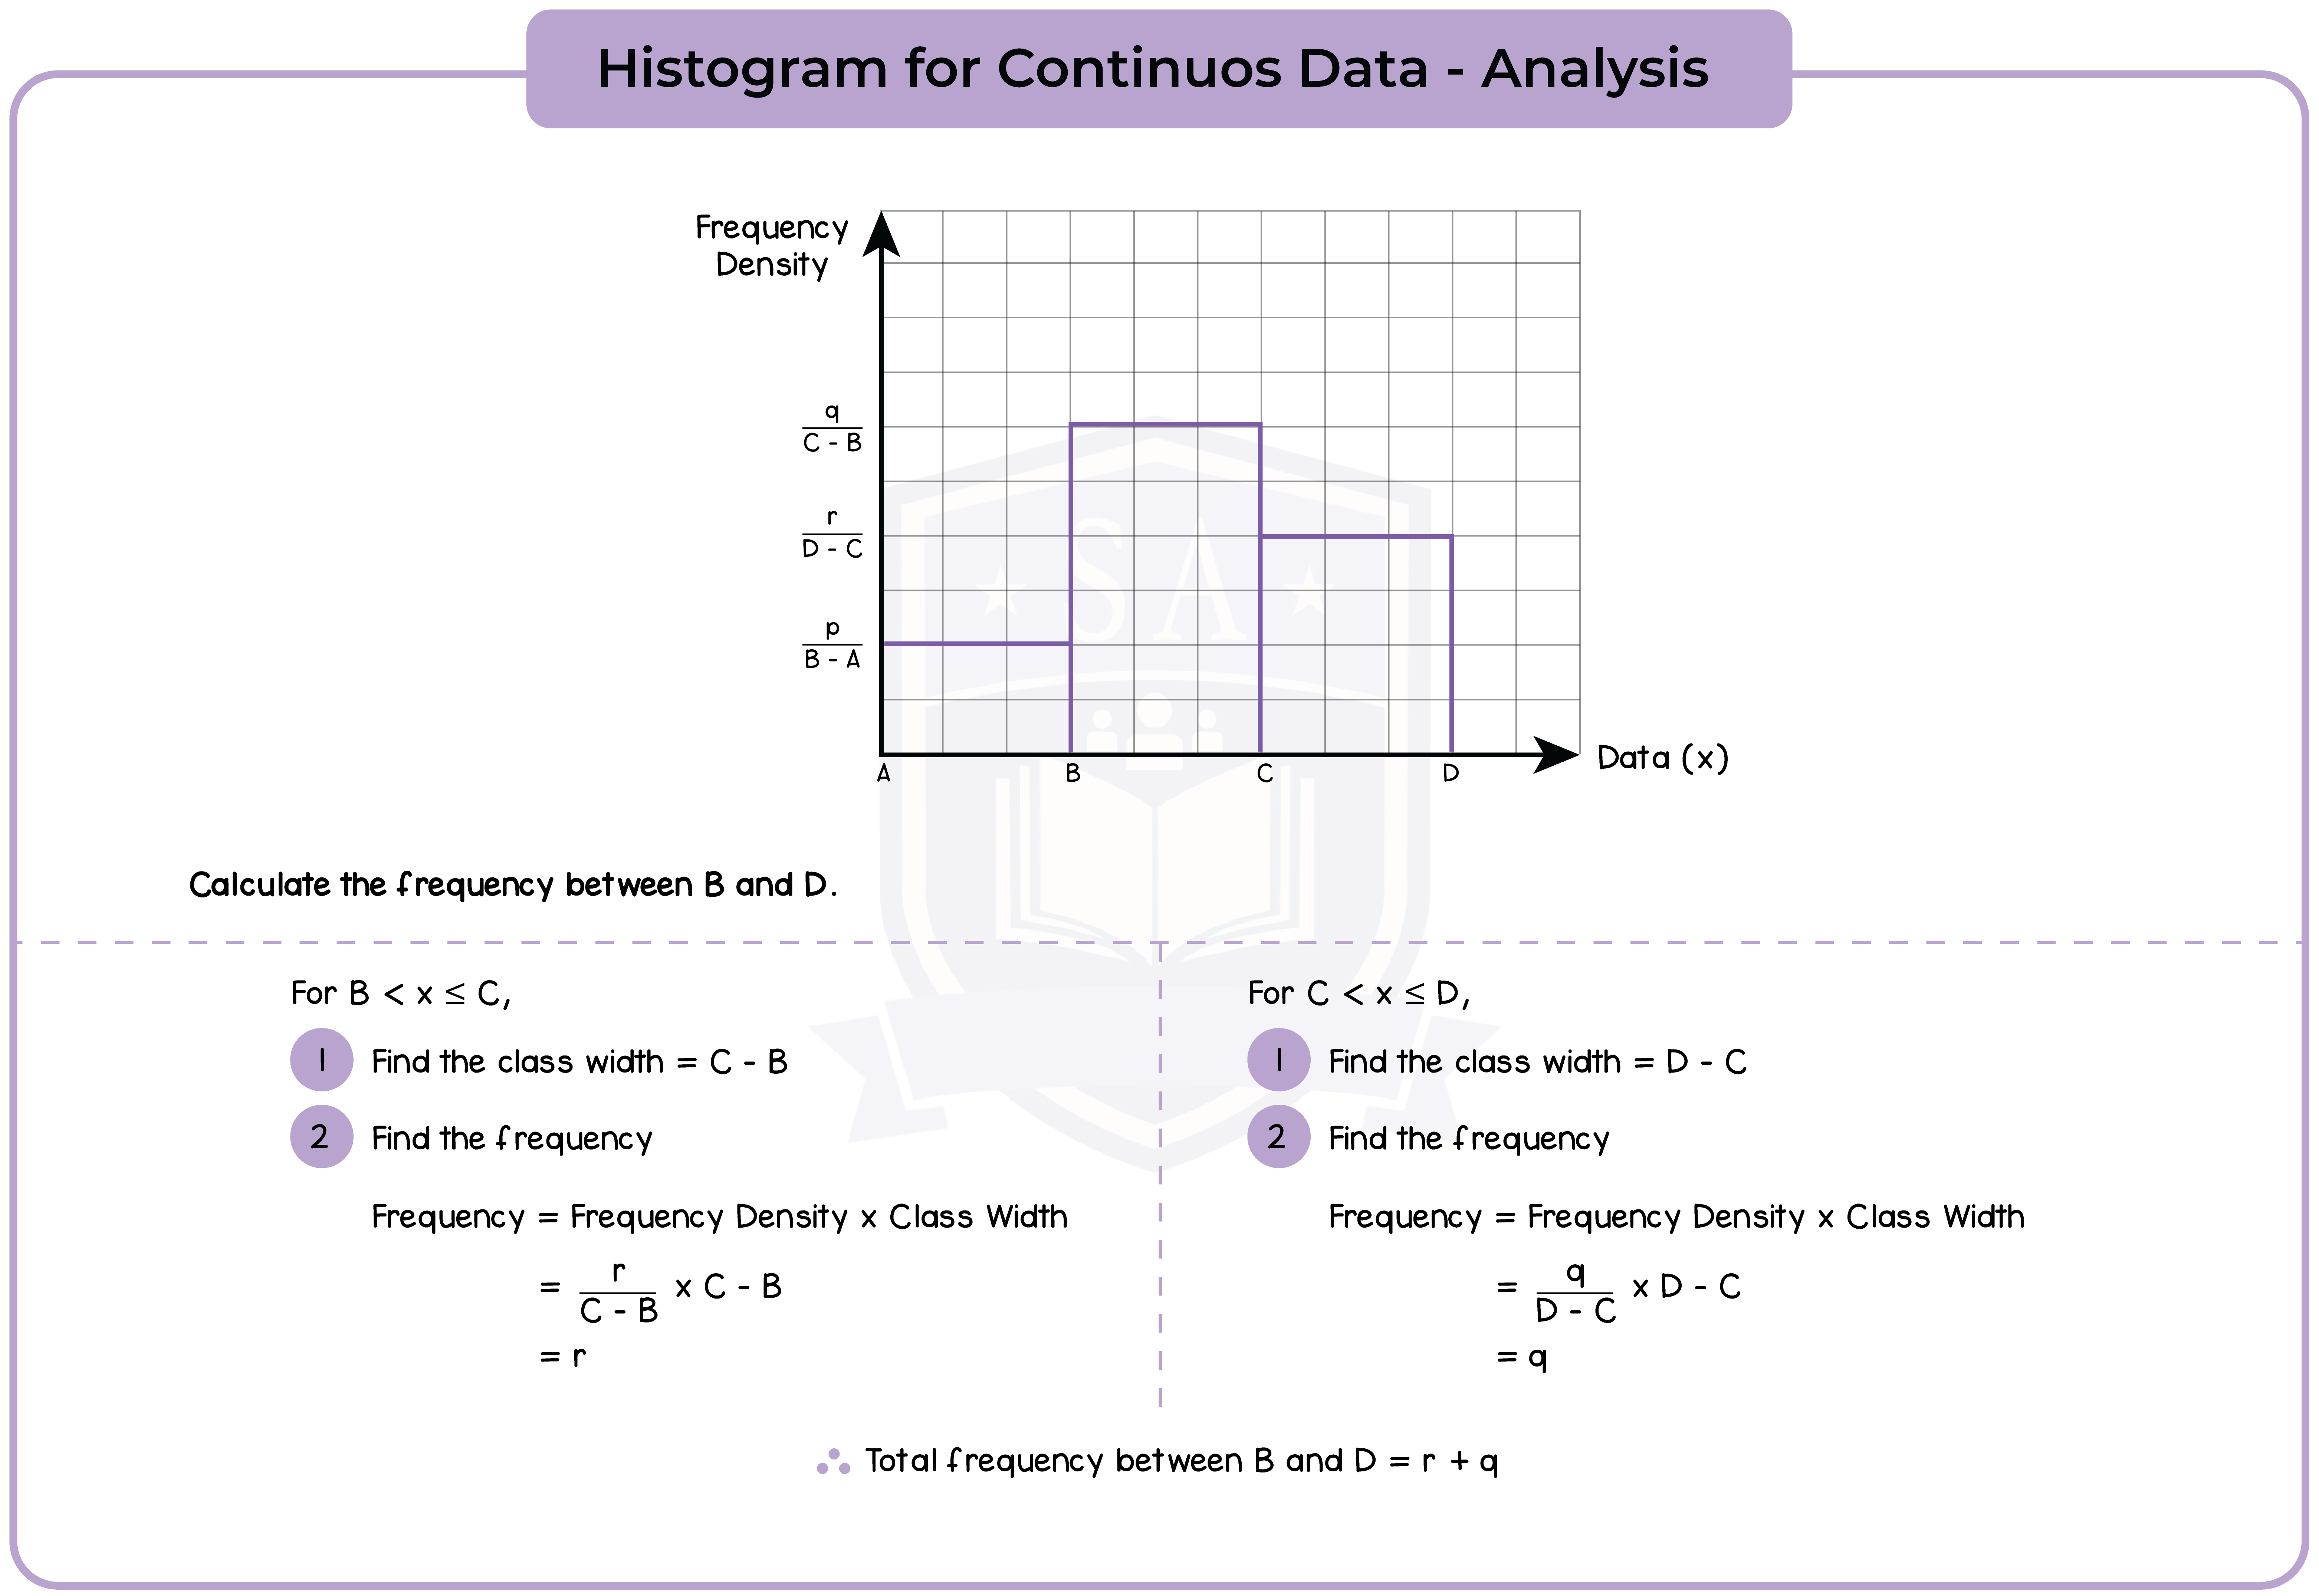 edexcel_igcse_mathematics a_topic 38_graphical representation of data_005_Histogram for Continuous Data - Analysis